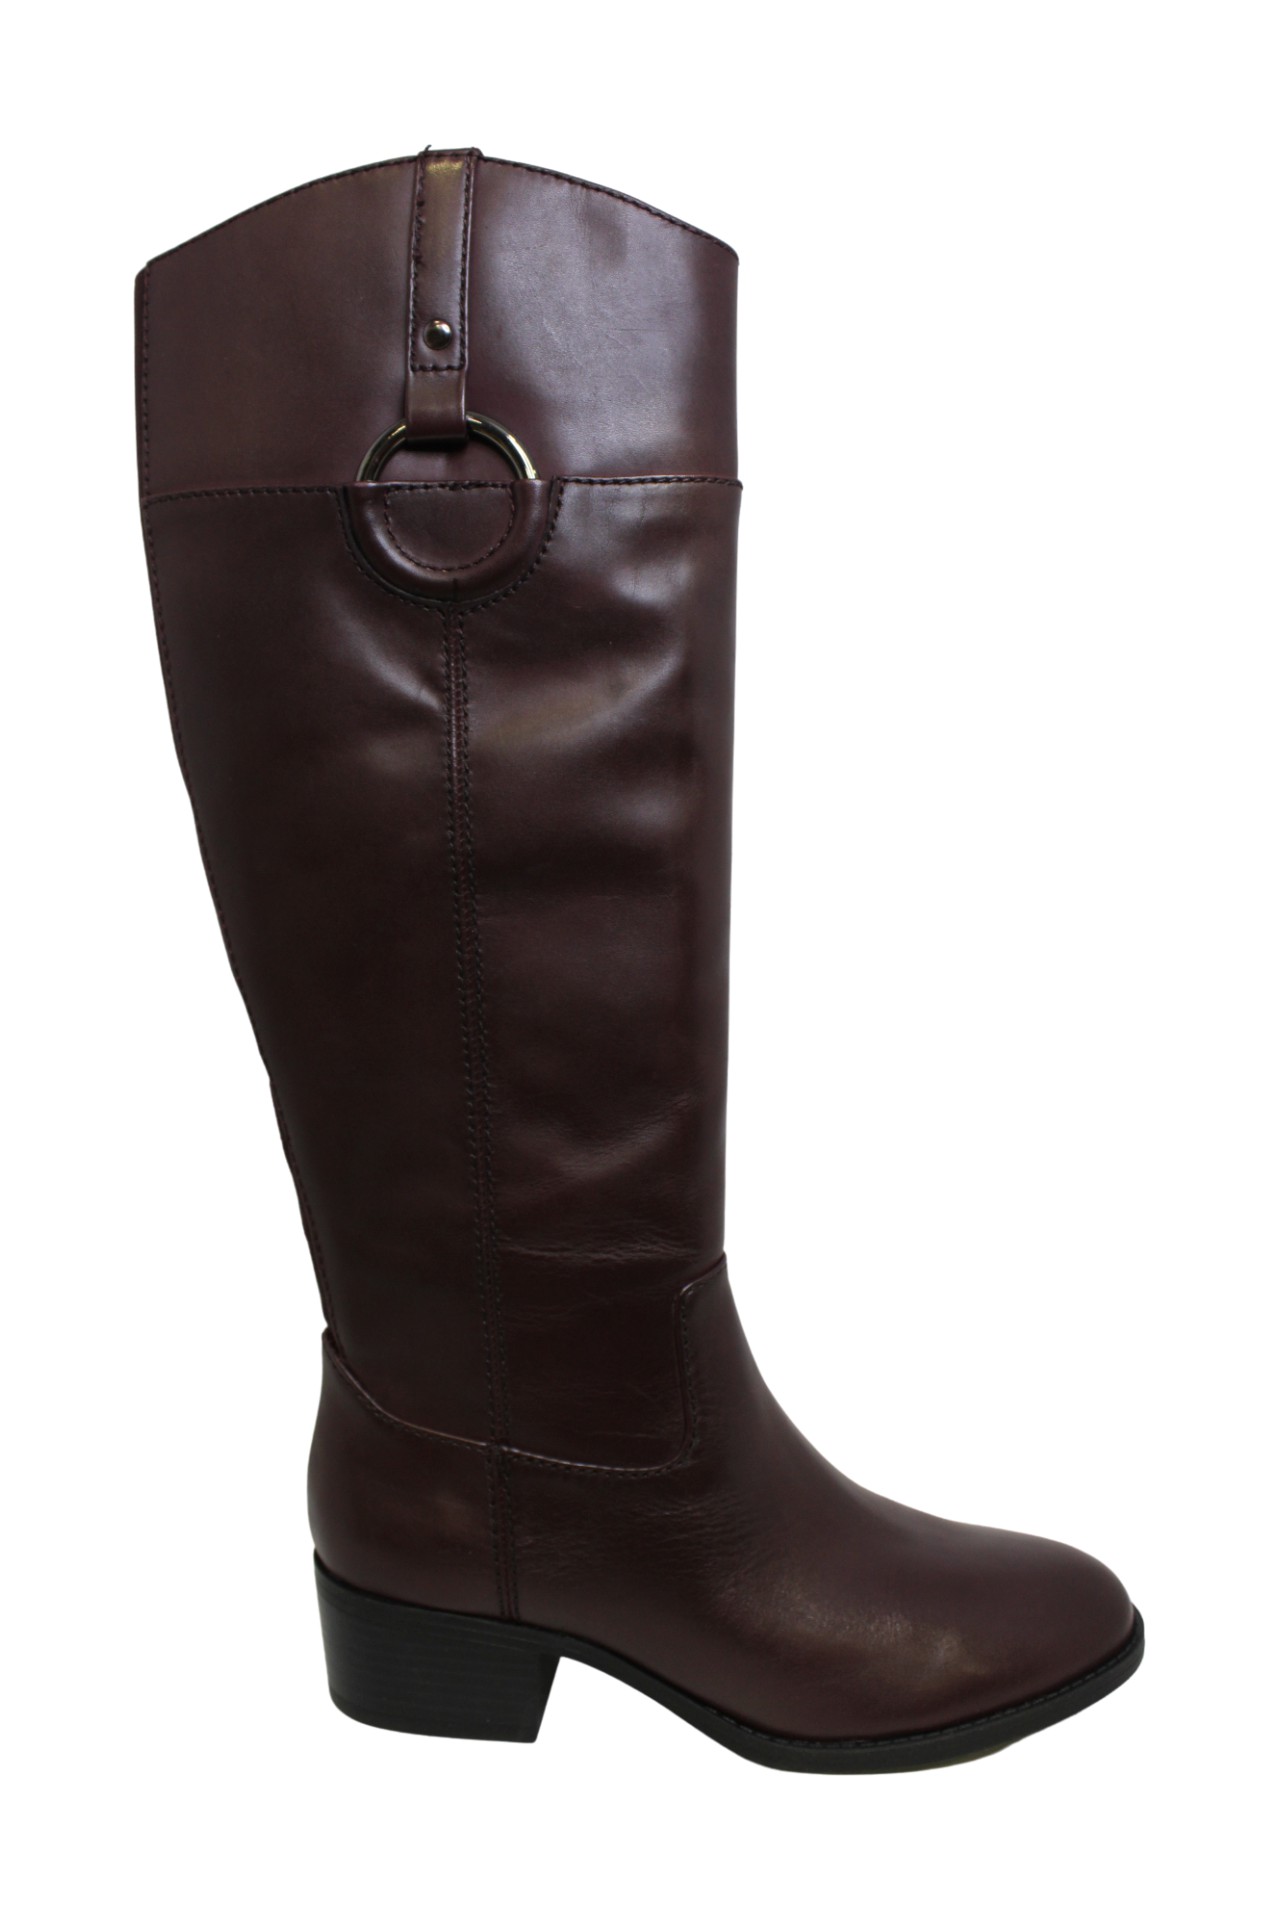 Alfani Womens Bexleyy Leather Almond Toe Knee High, Wine Leather, Size